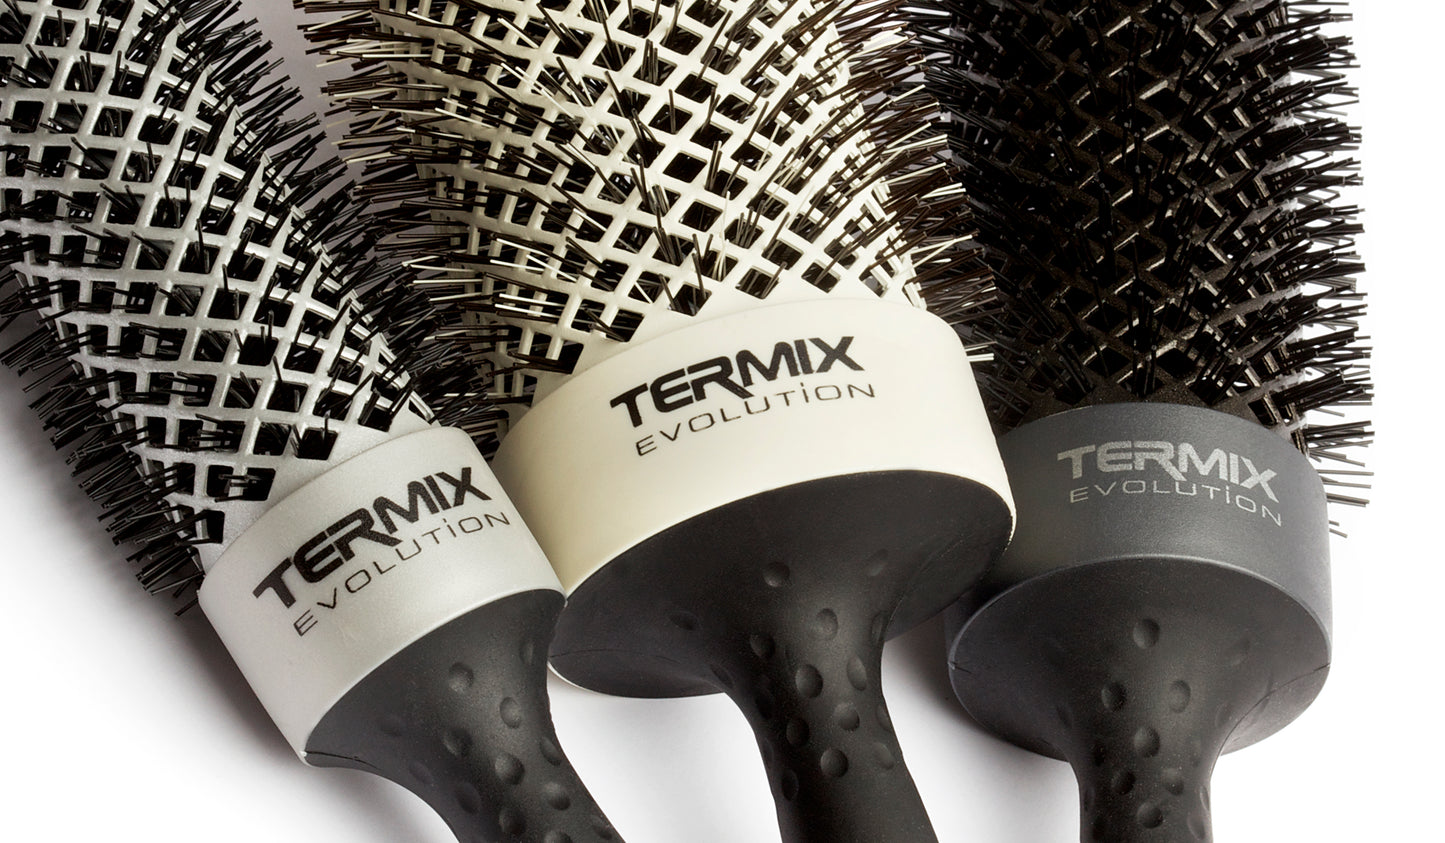 *Termix Evolution Styling Brush 37mm